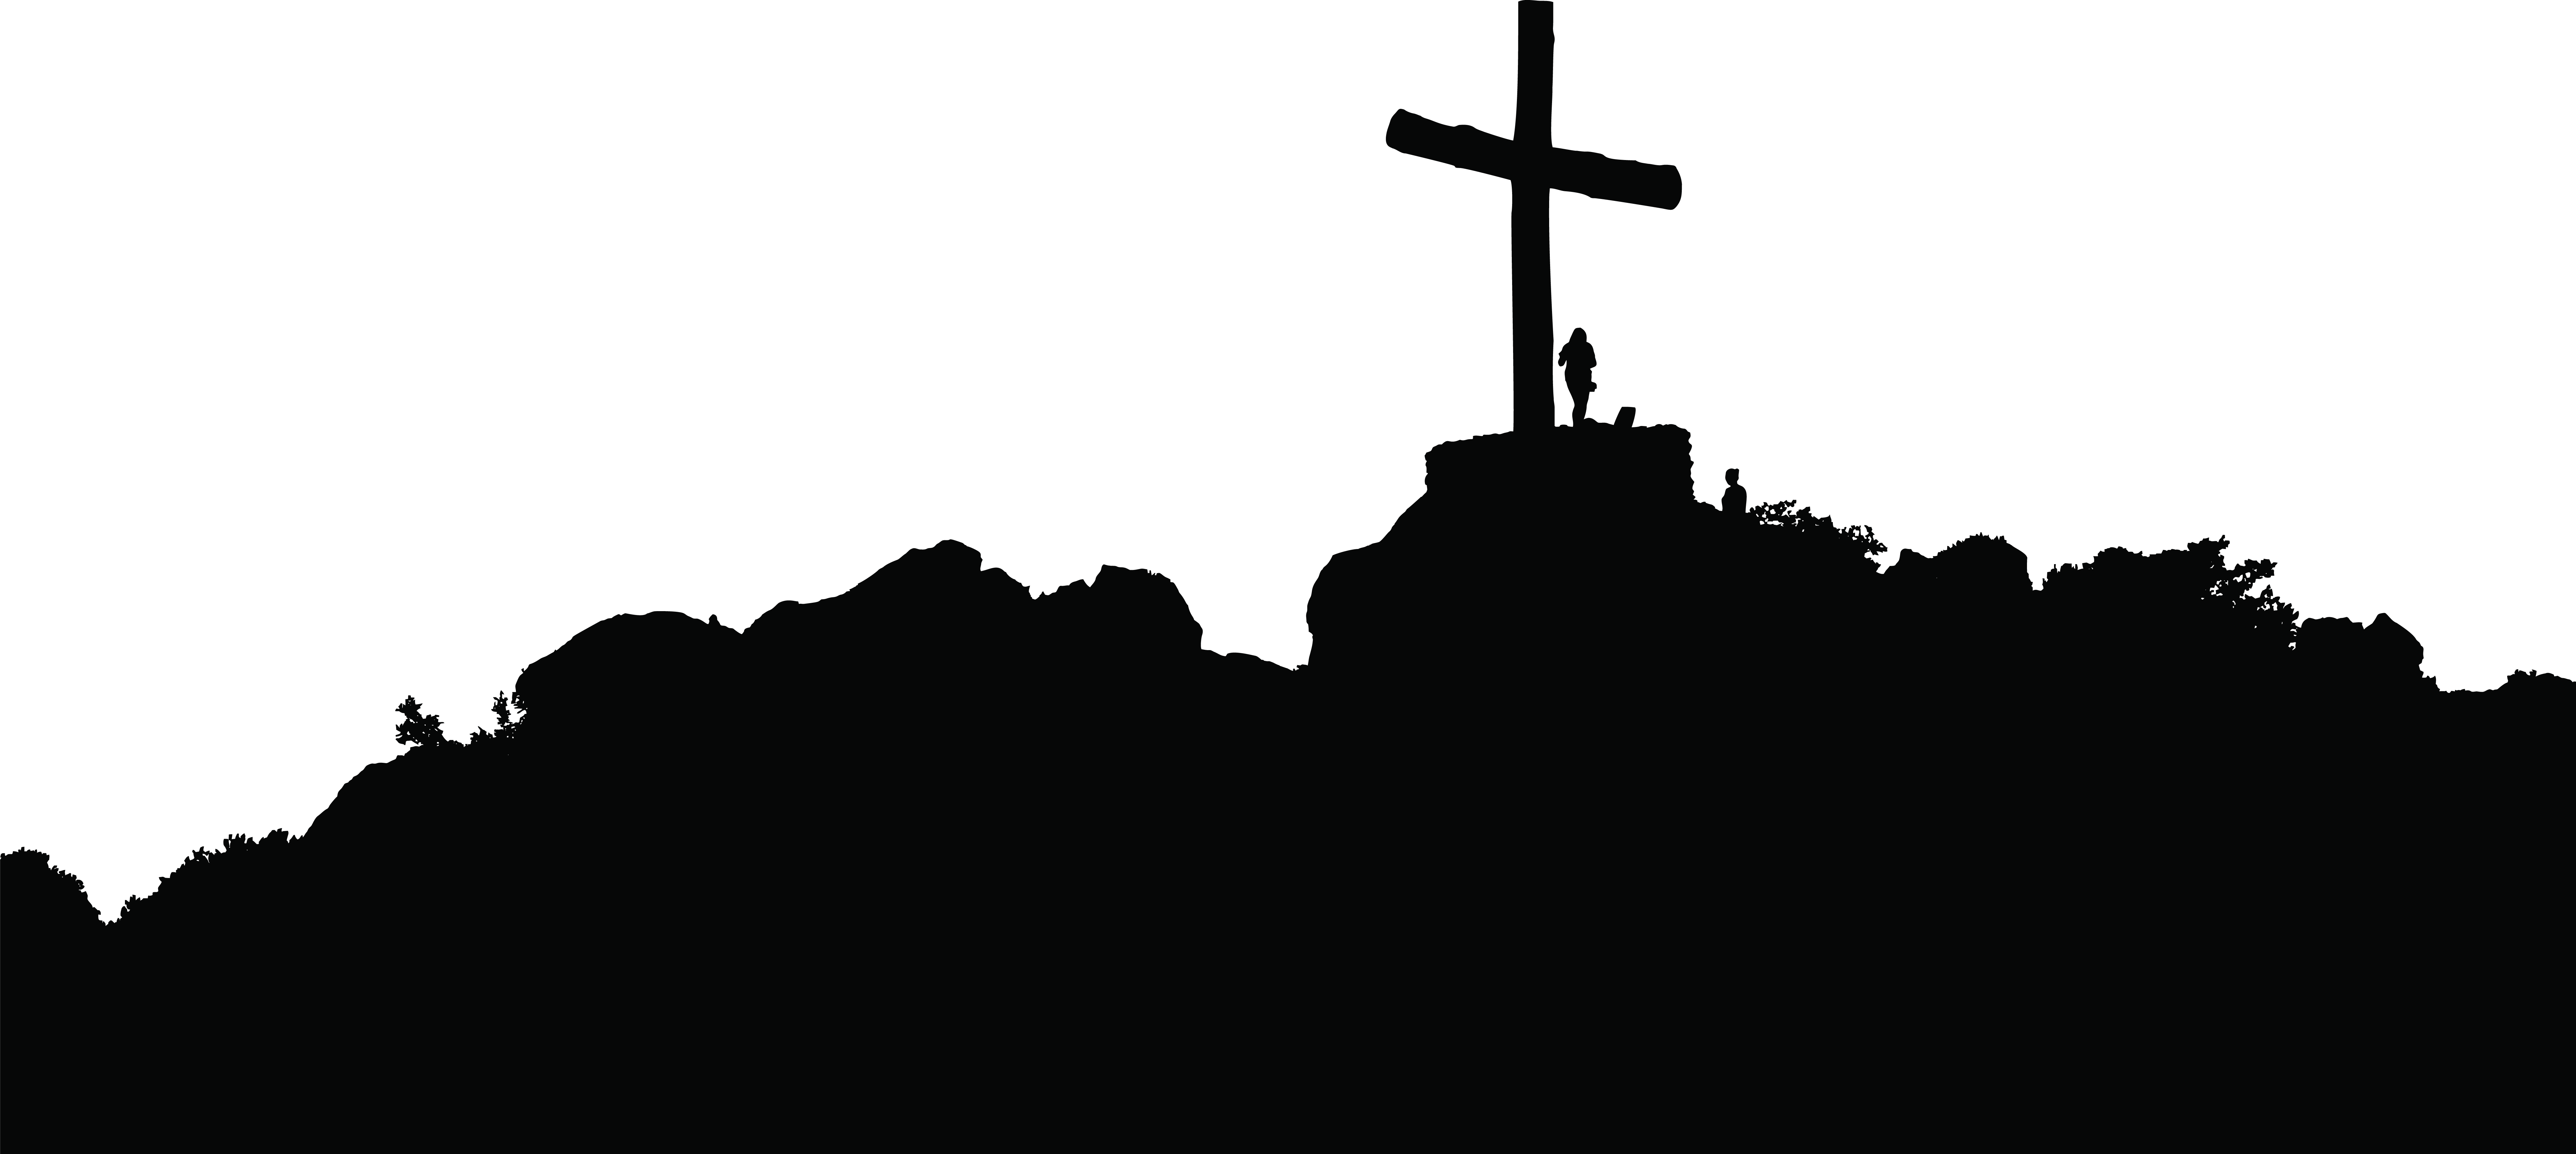 Silhouette christian cross.